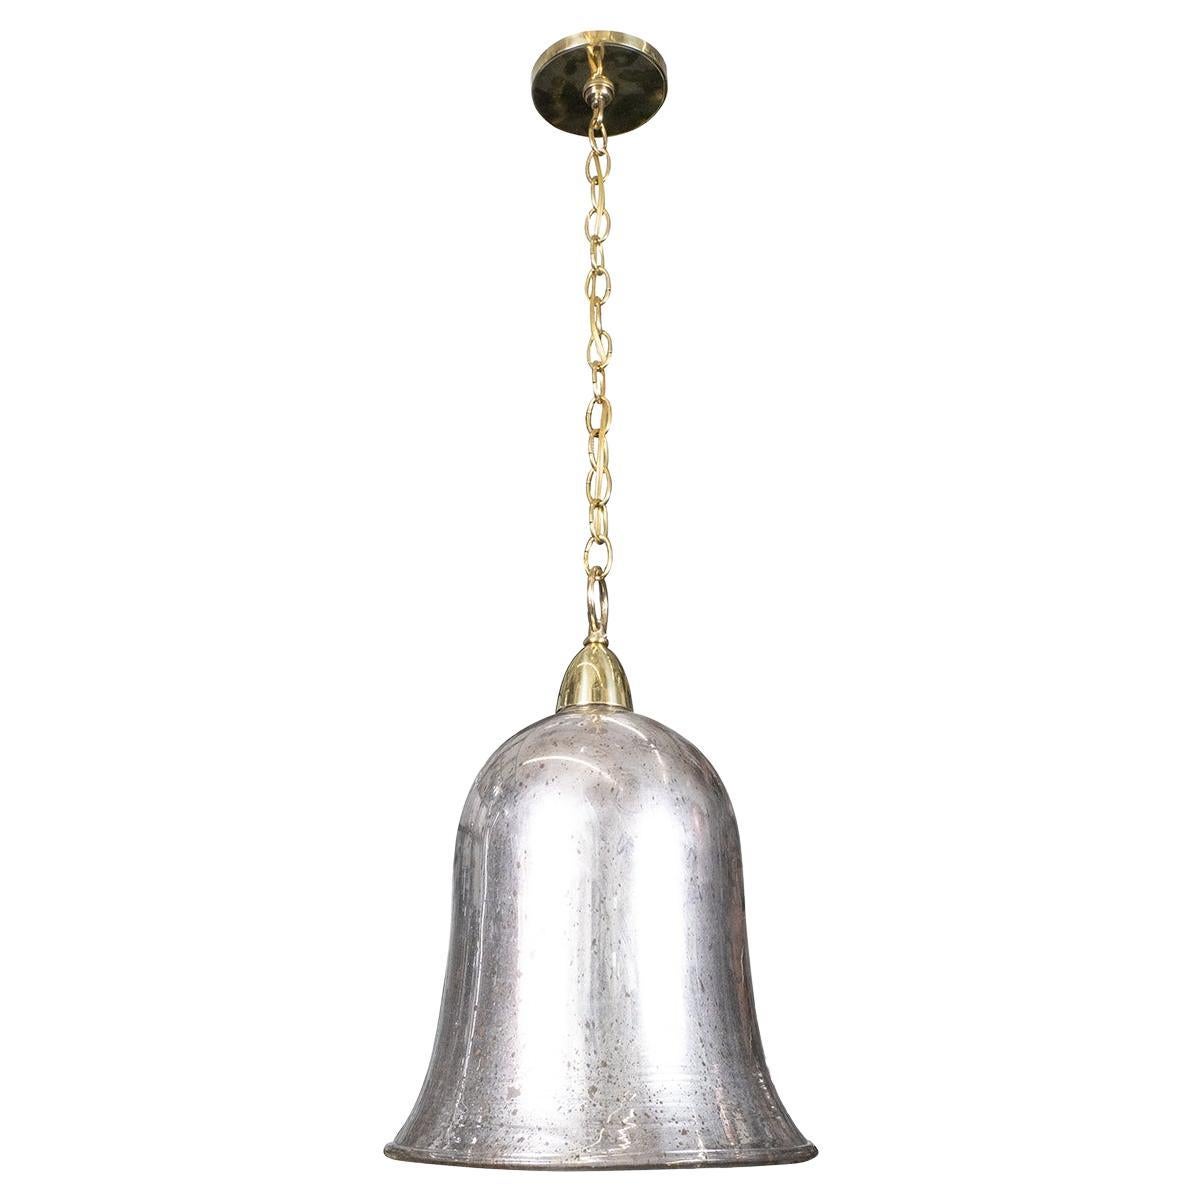 Bell-shaped mercury glass pendant